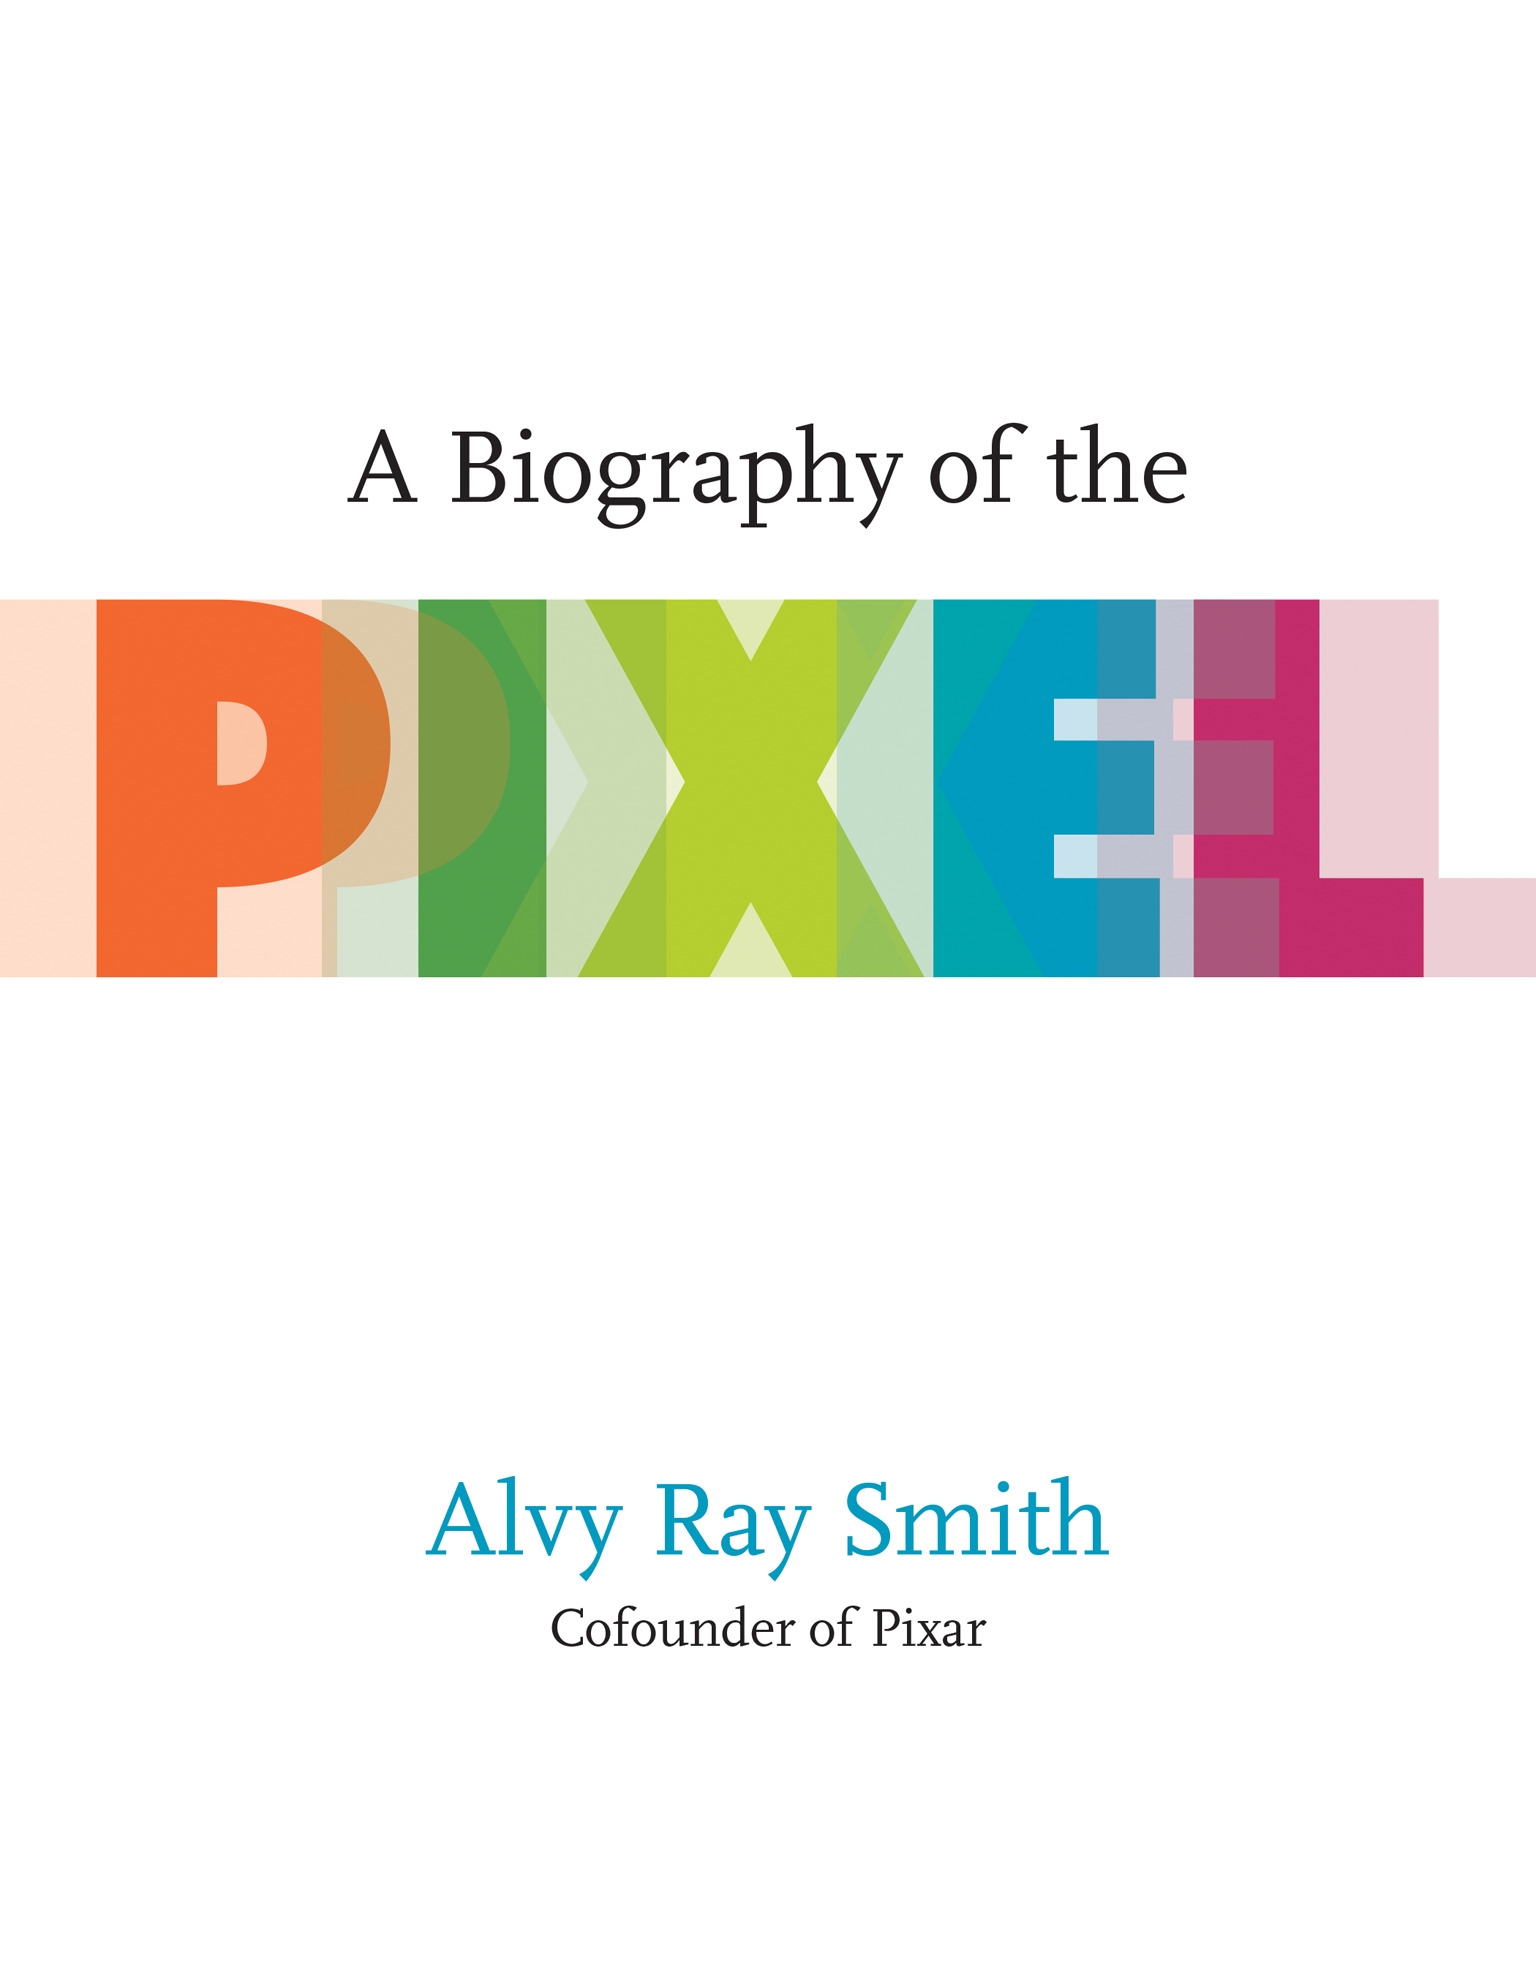 a biography of the pixel pdf